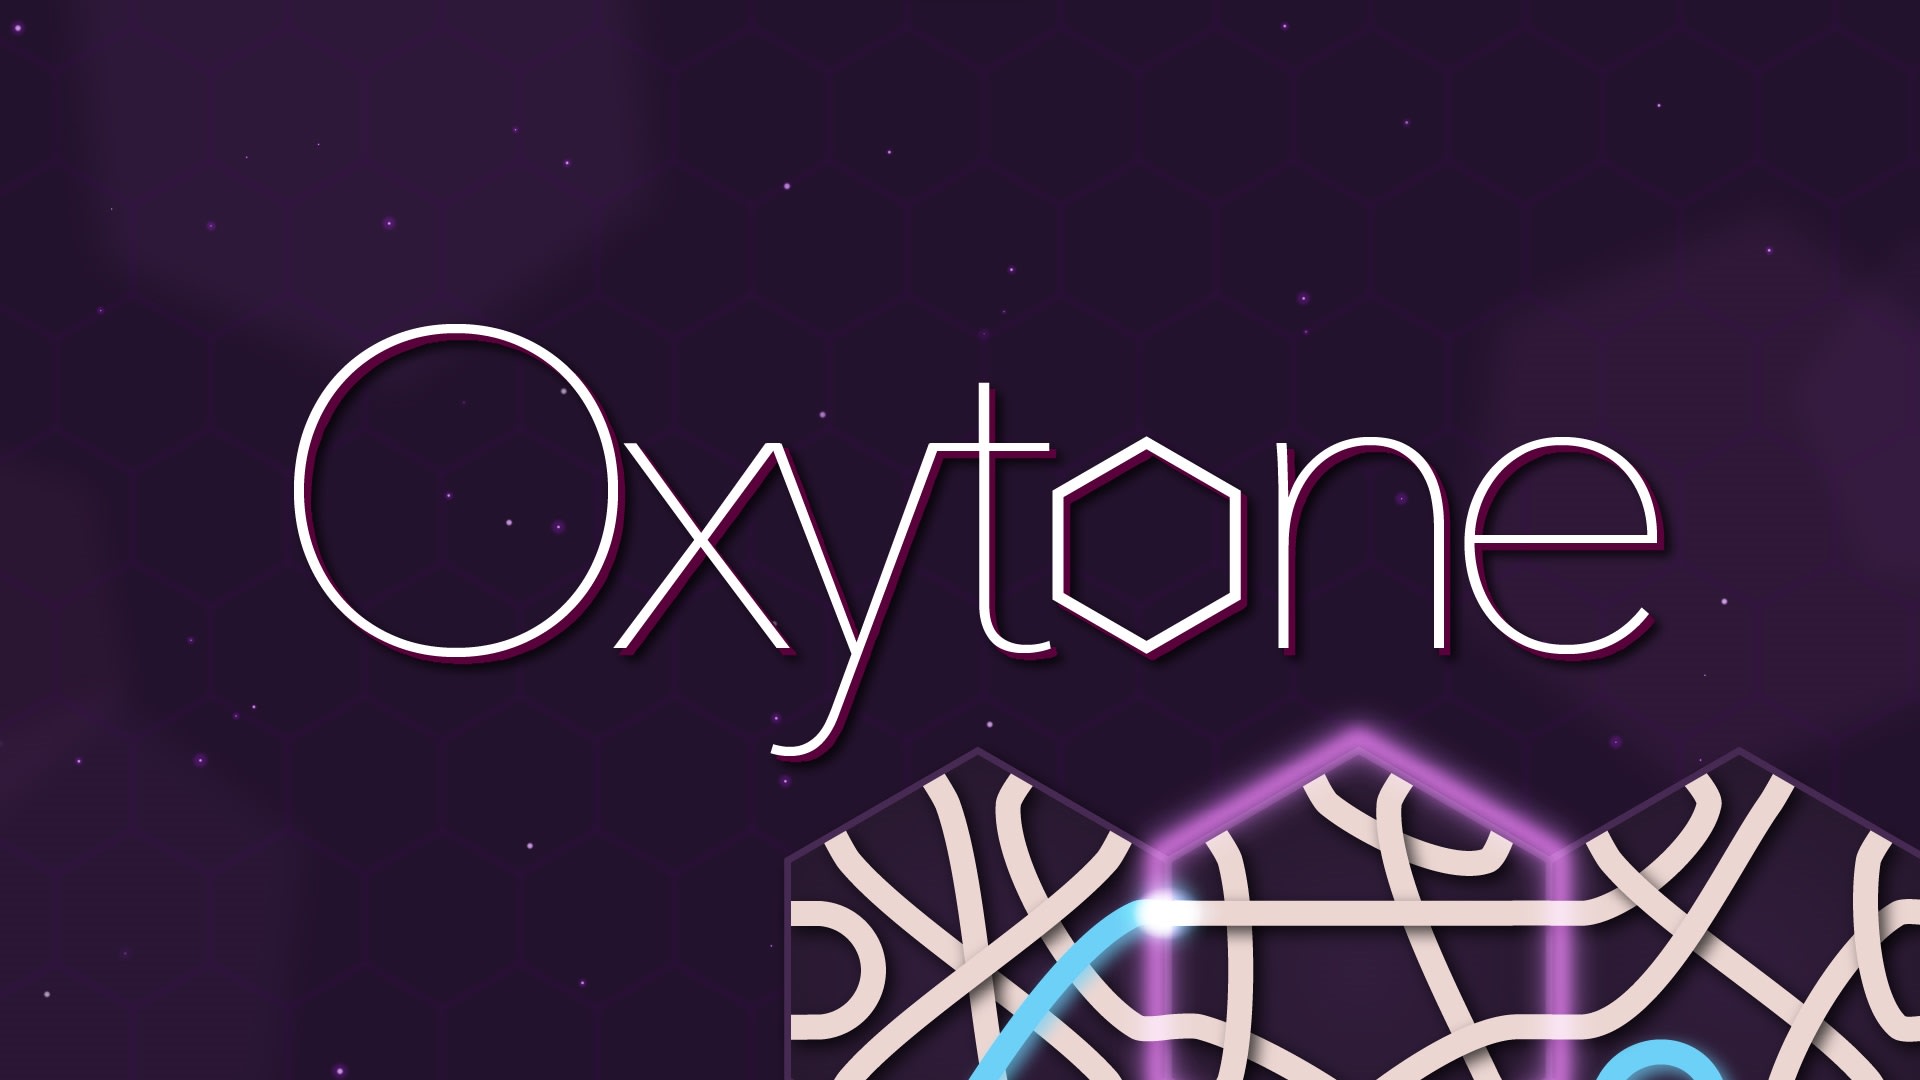 Oxytone 1